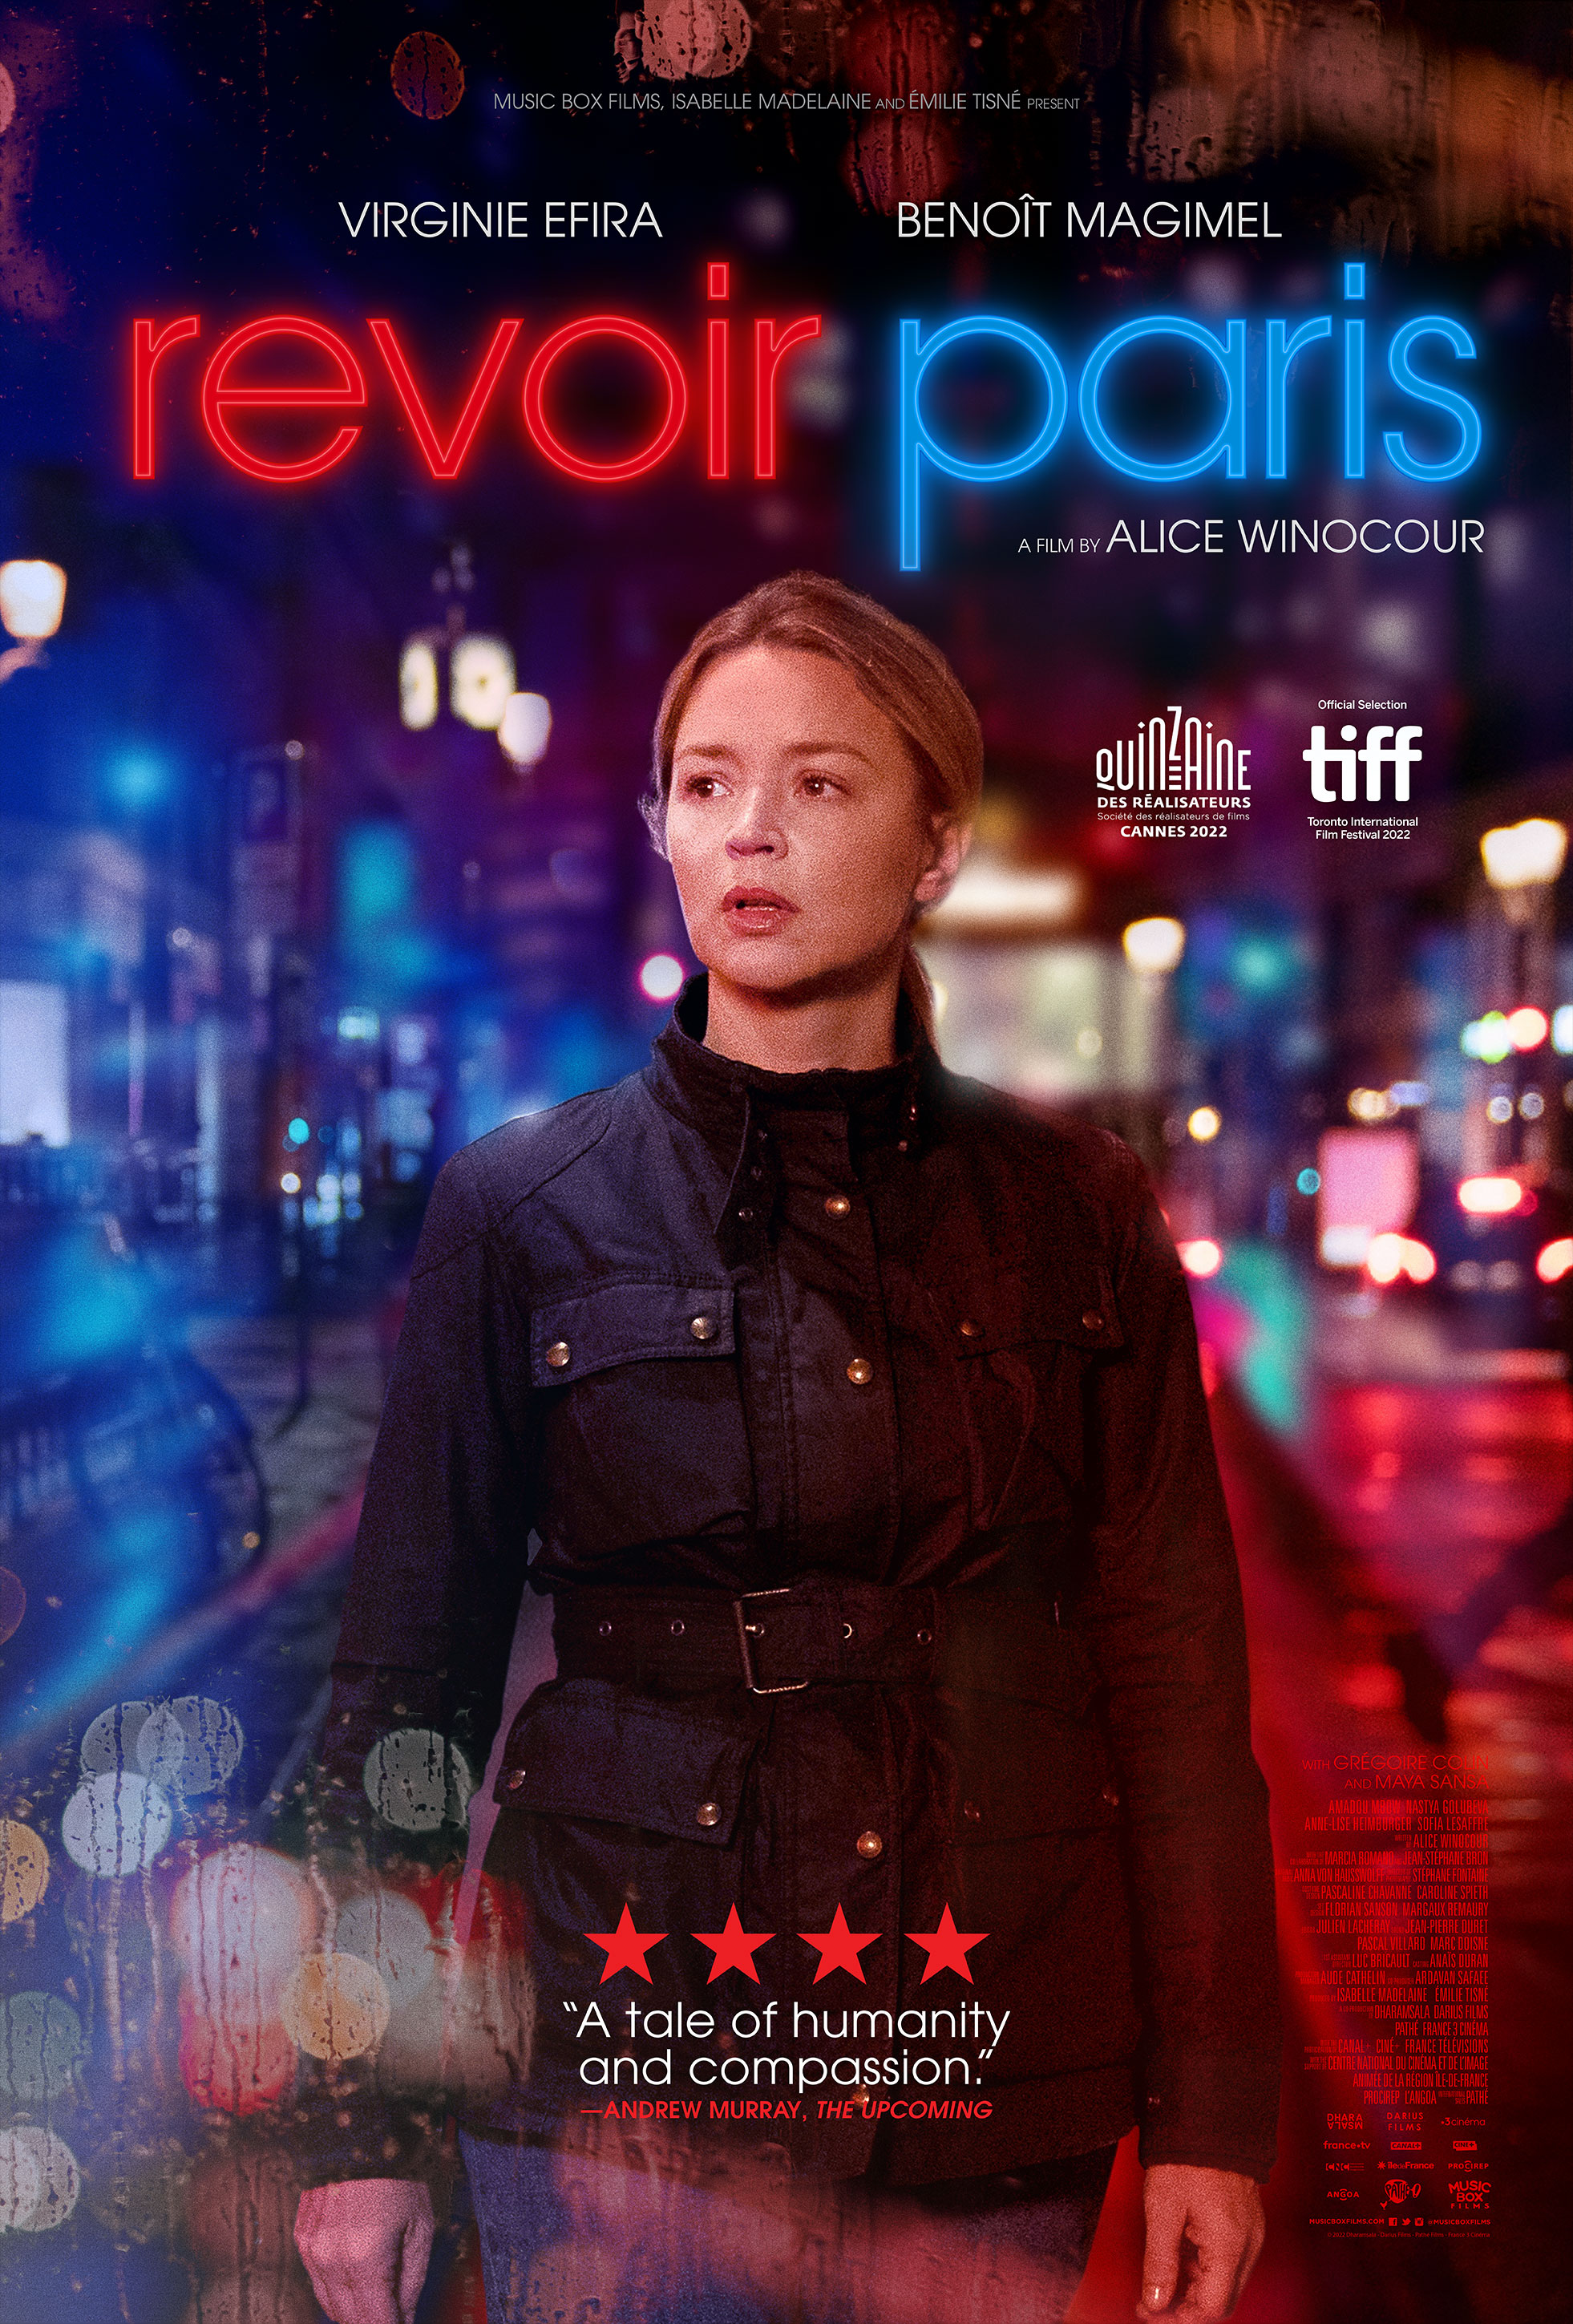 Stiahni si Filmy CZ/SK dabing Znovu Paříž / Revoir Paris (2022)(CZ)[WEB-DL][1080p] = CSFD 83%